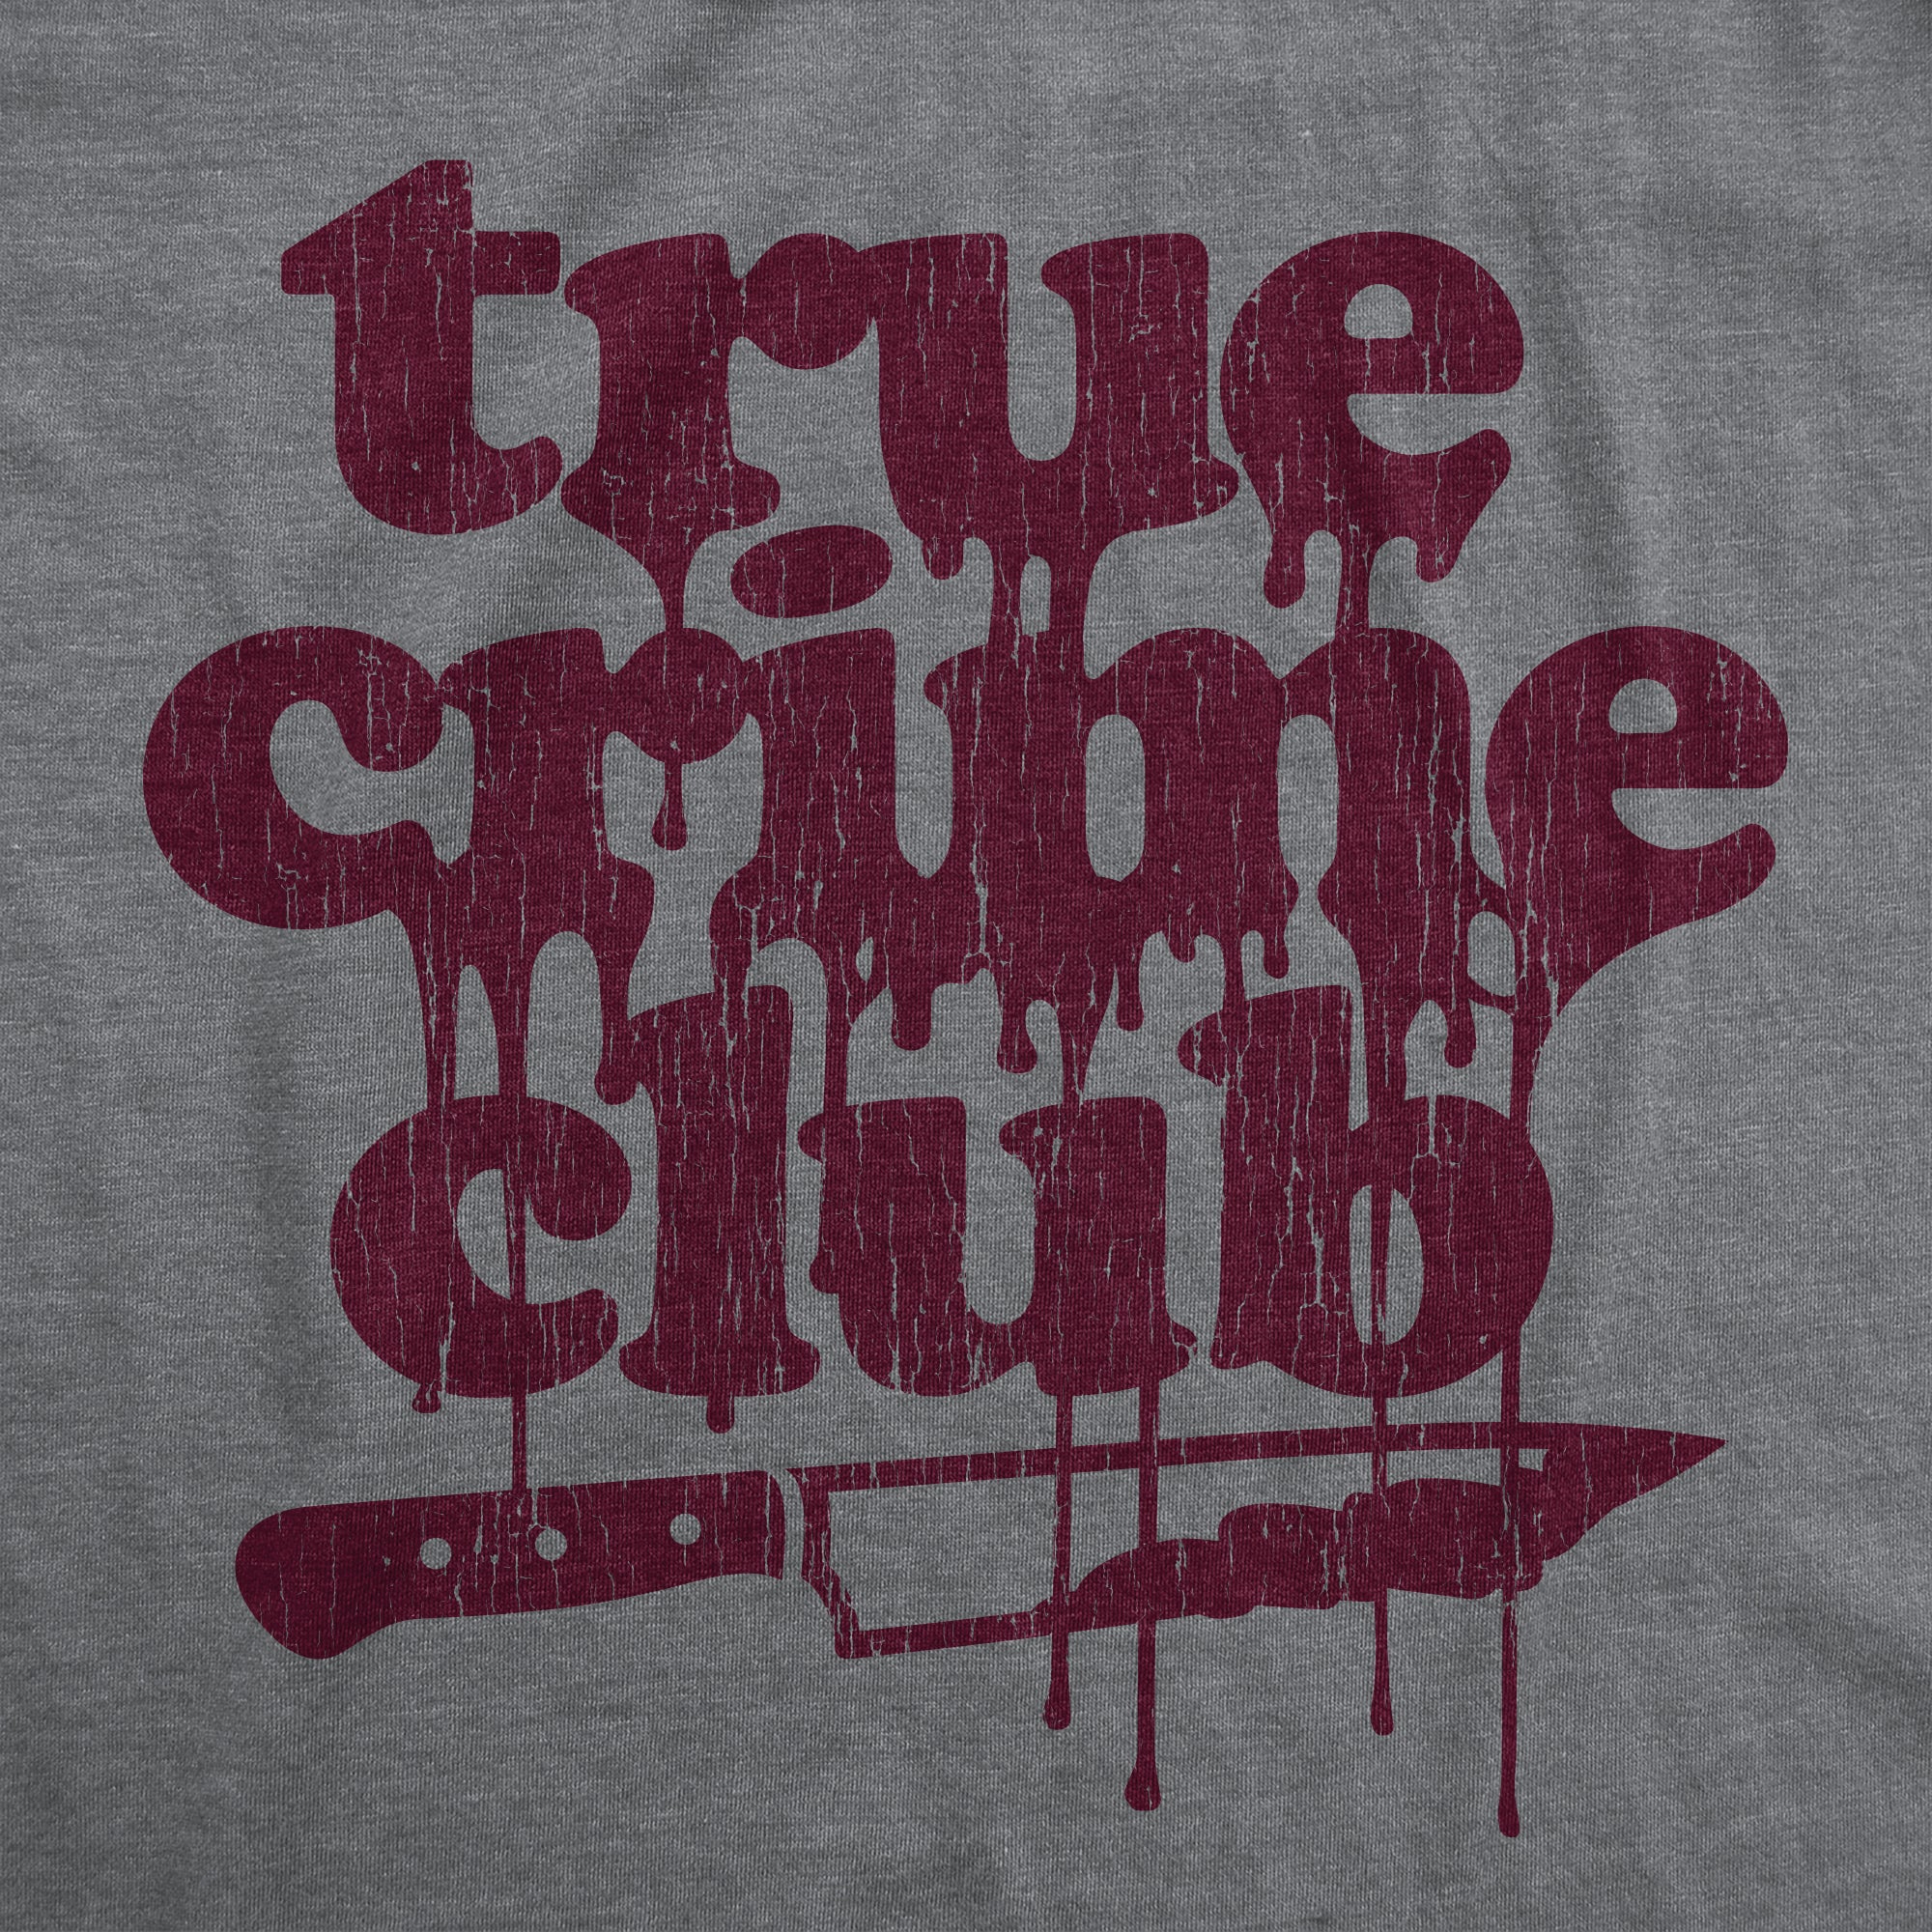 Funny Dark Heather Grey - True Crime True Crime Club Mens T Shirt Nerdy Sarcastic Halloween Tee